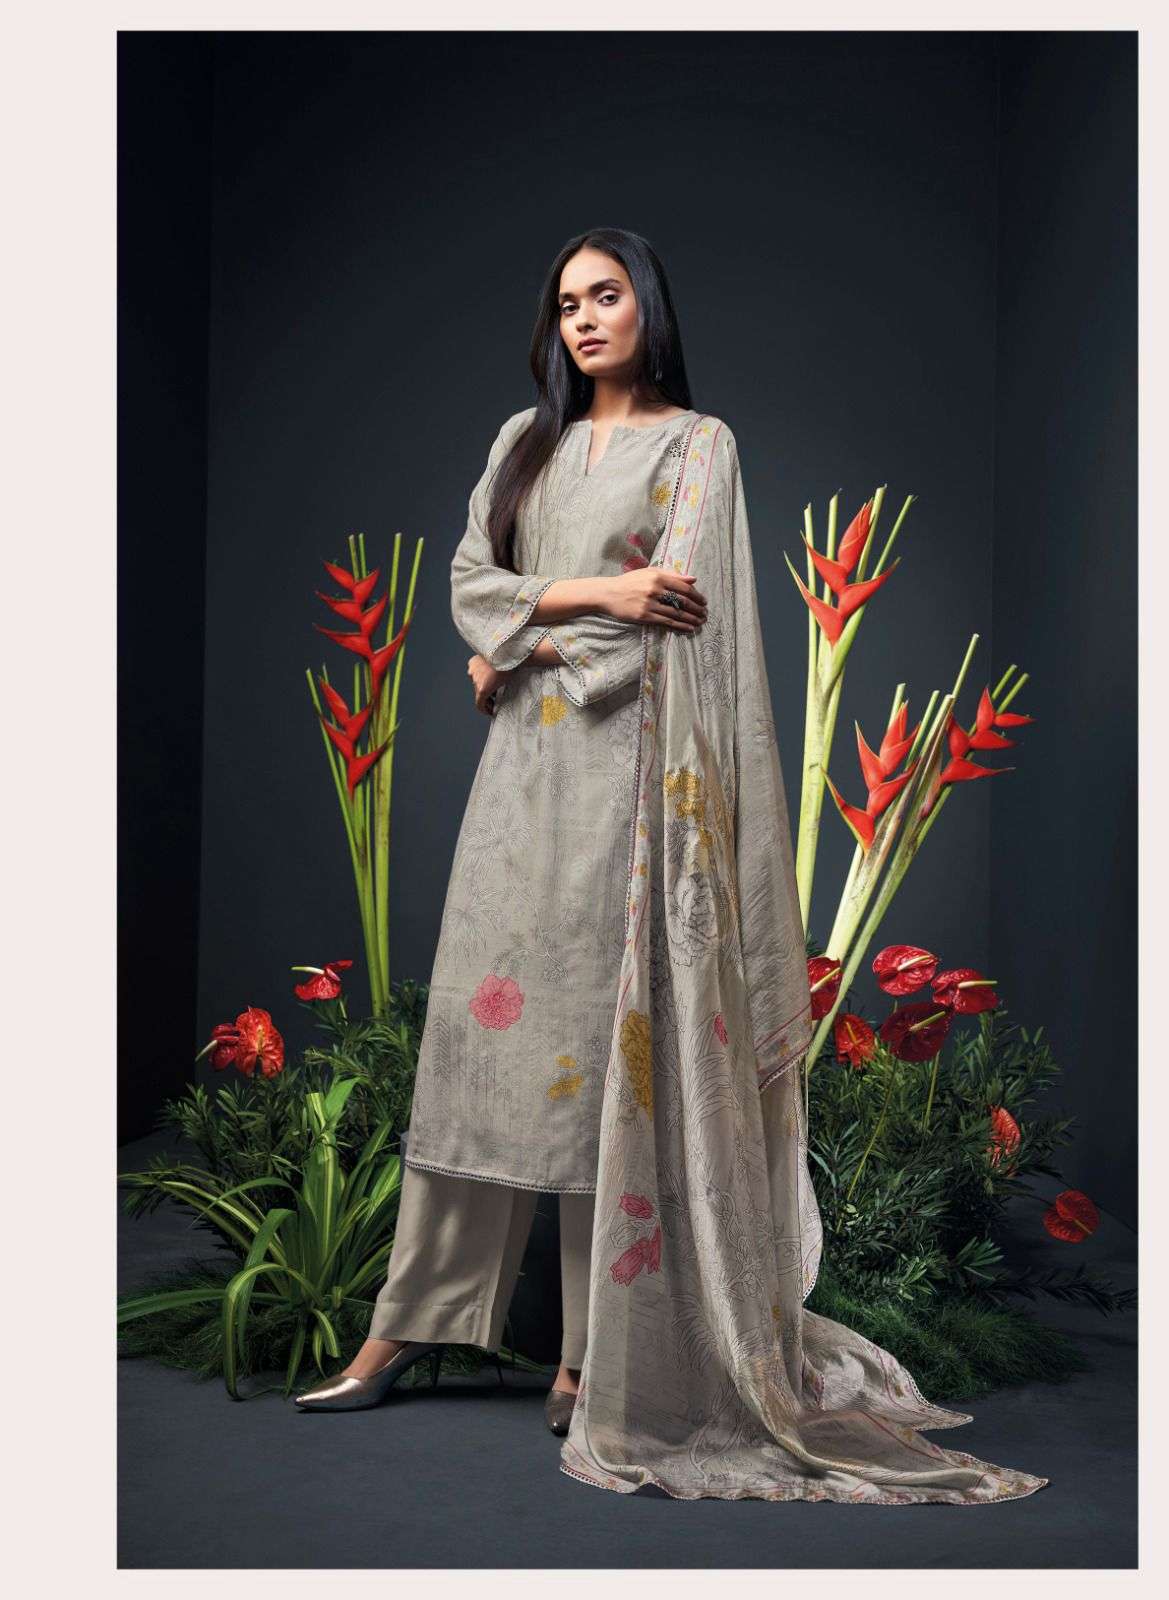 ganga zanera colour series designer wedding wear salwar kameez wholesaler surat gujarat